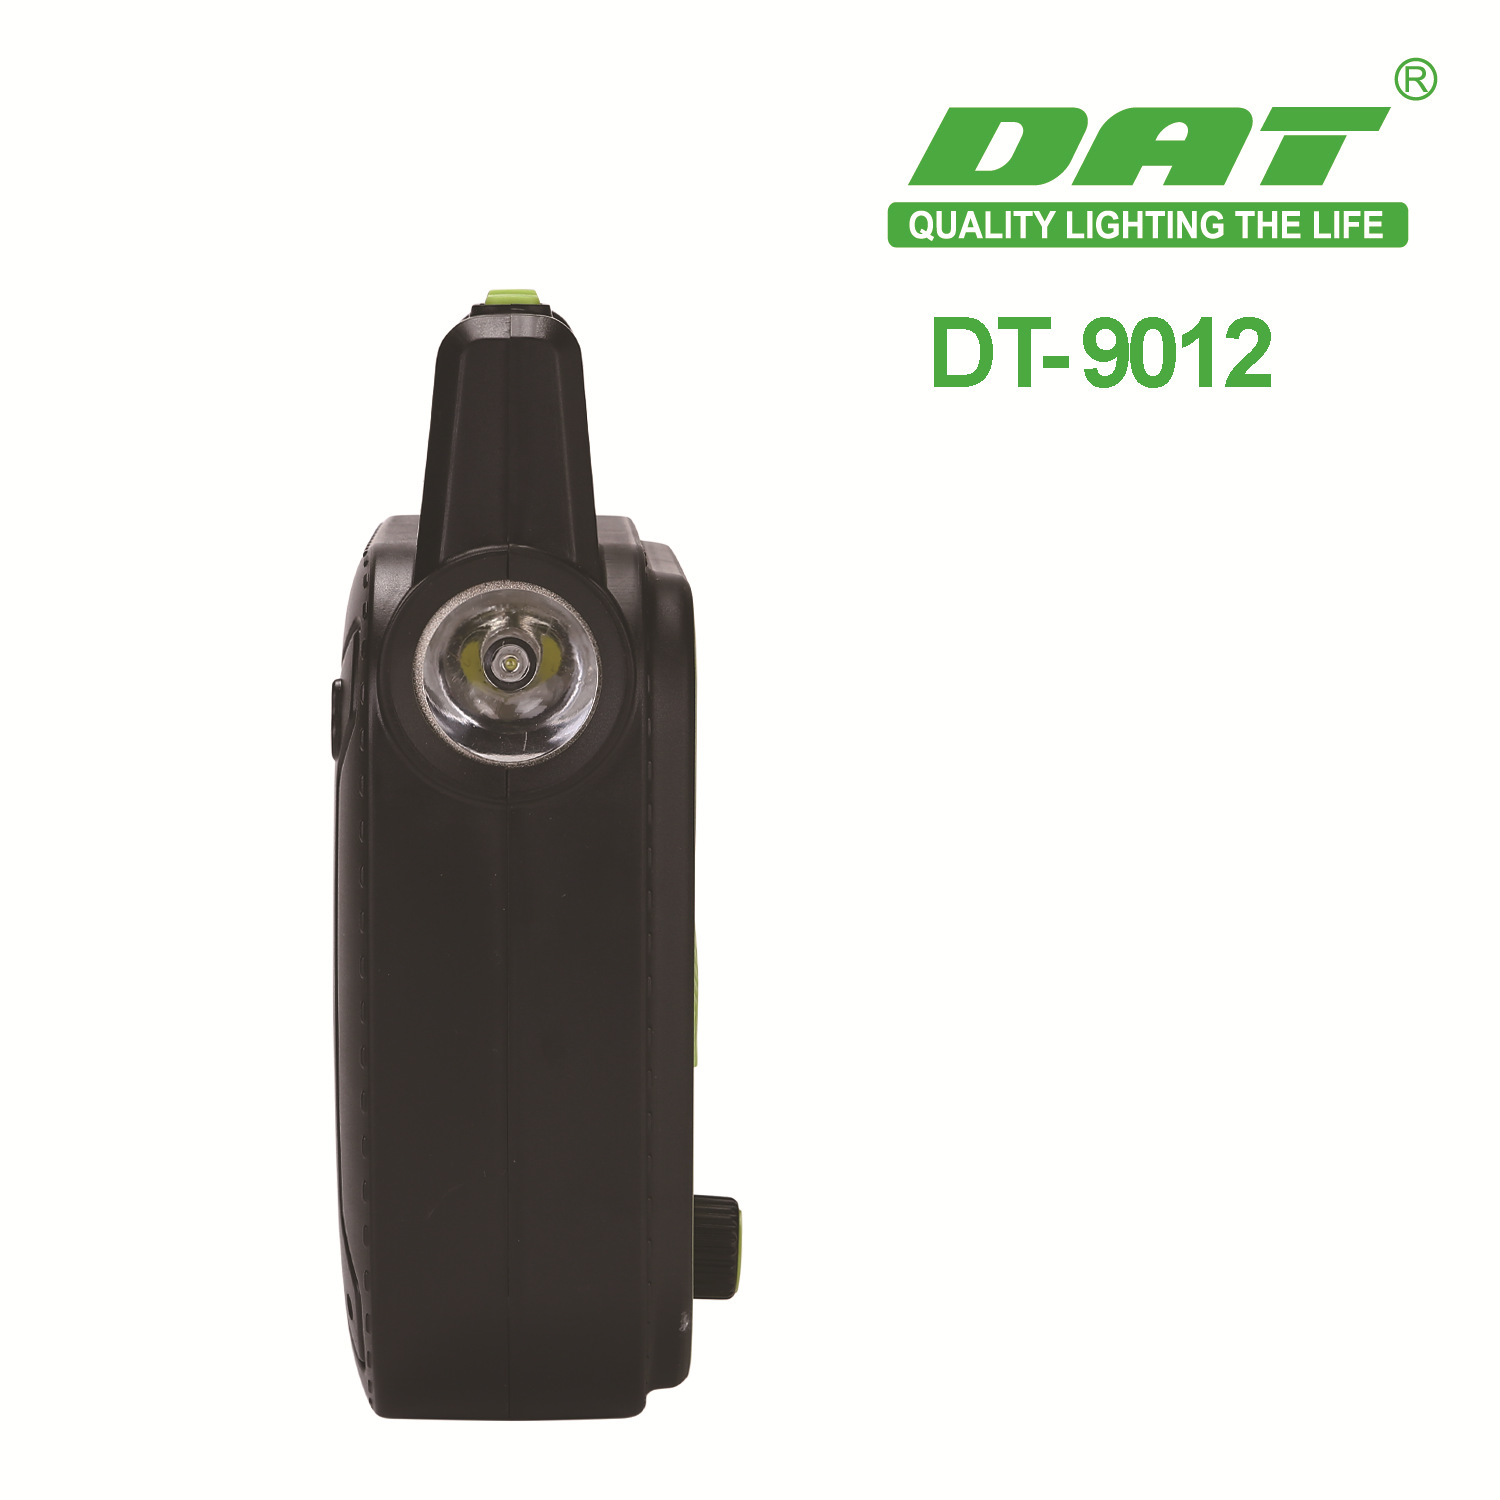 DT-9012 Portable Outdoor Lighting Led Light Solar Lighting System Emergency Charging Probe Camping